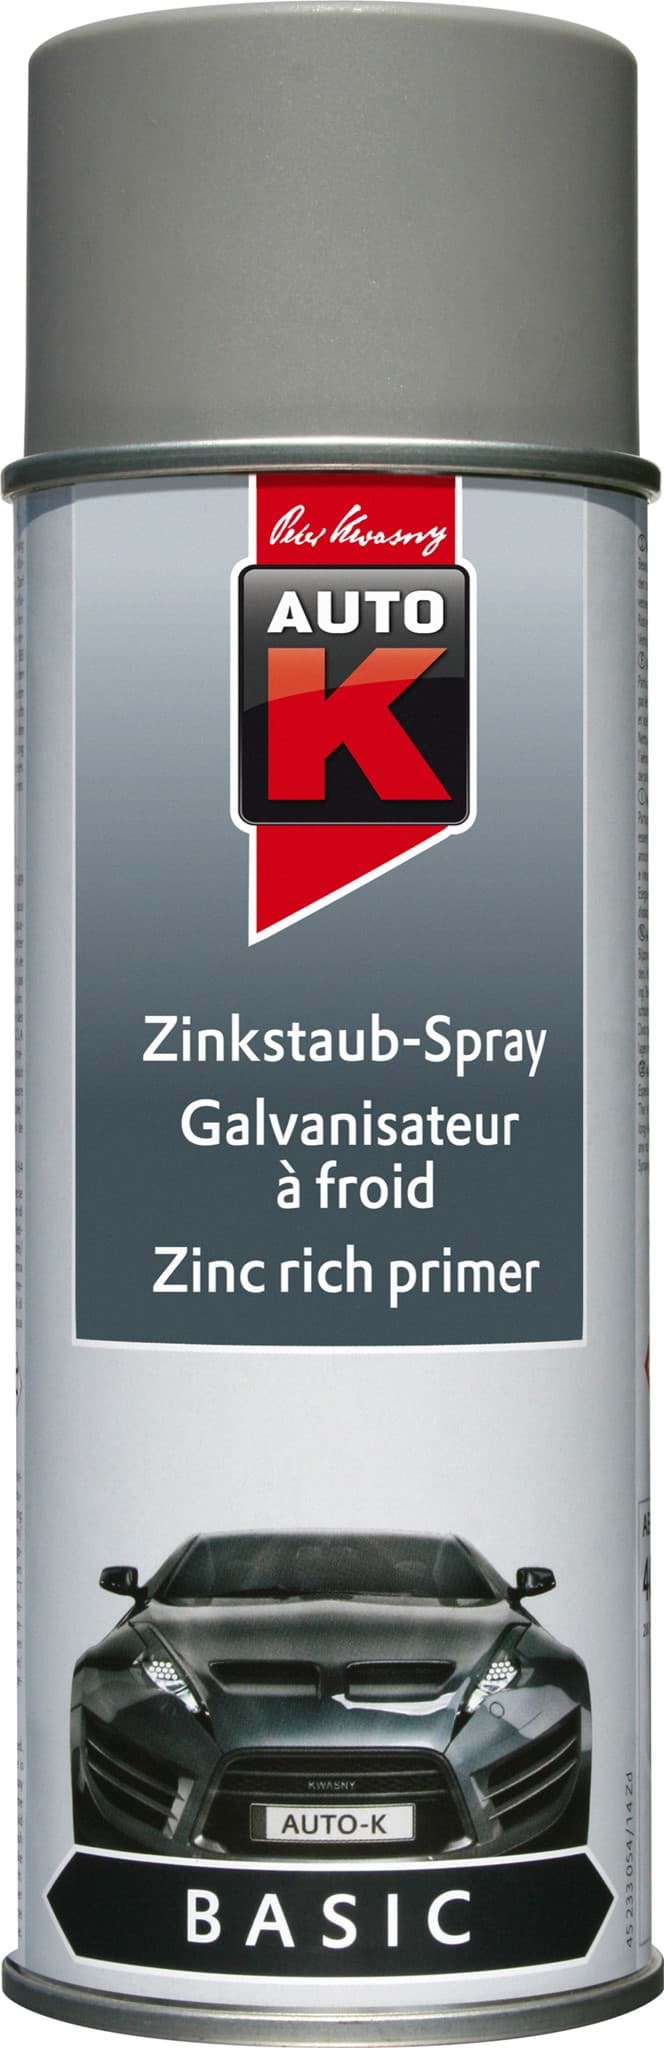 Afbeelding van Zinkstaub Spray Zinkspray 400ml AutoK